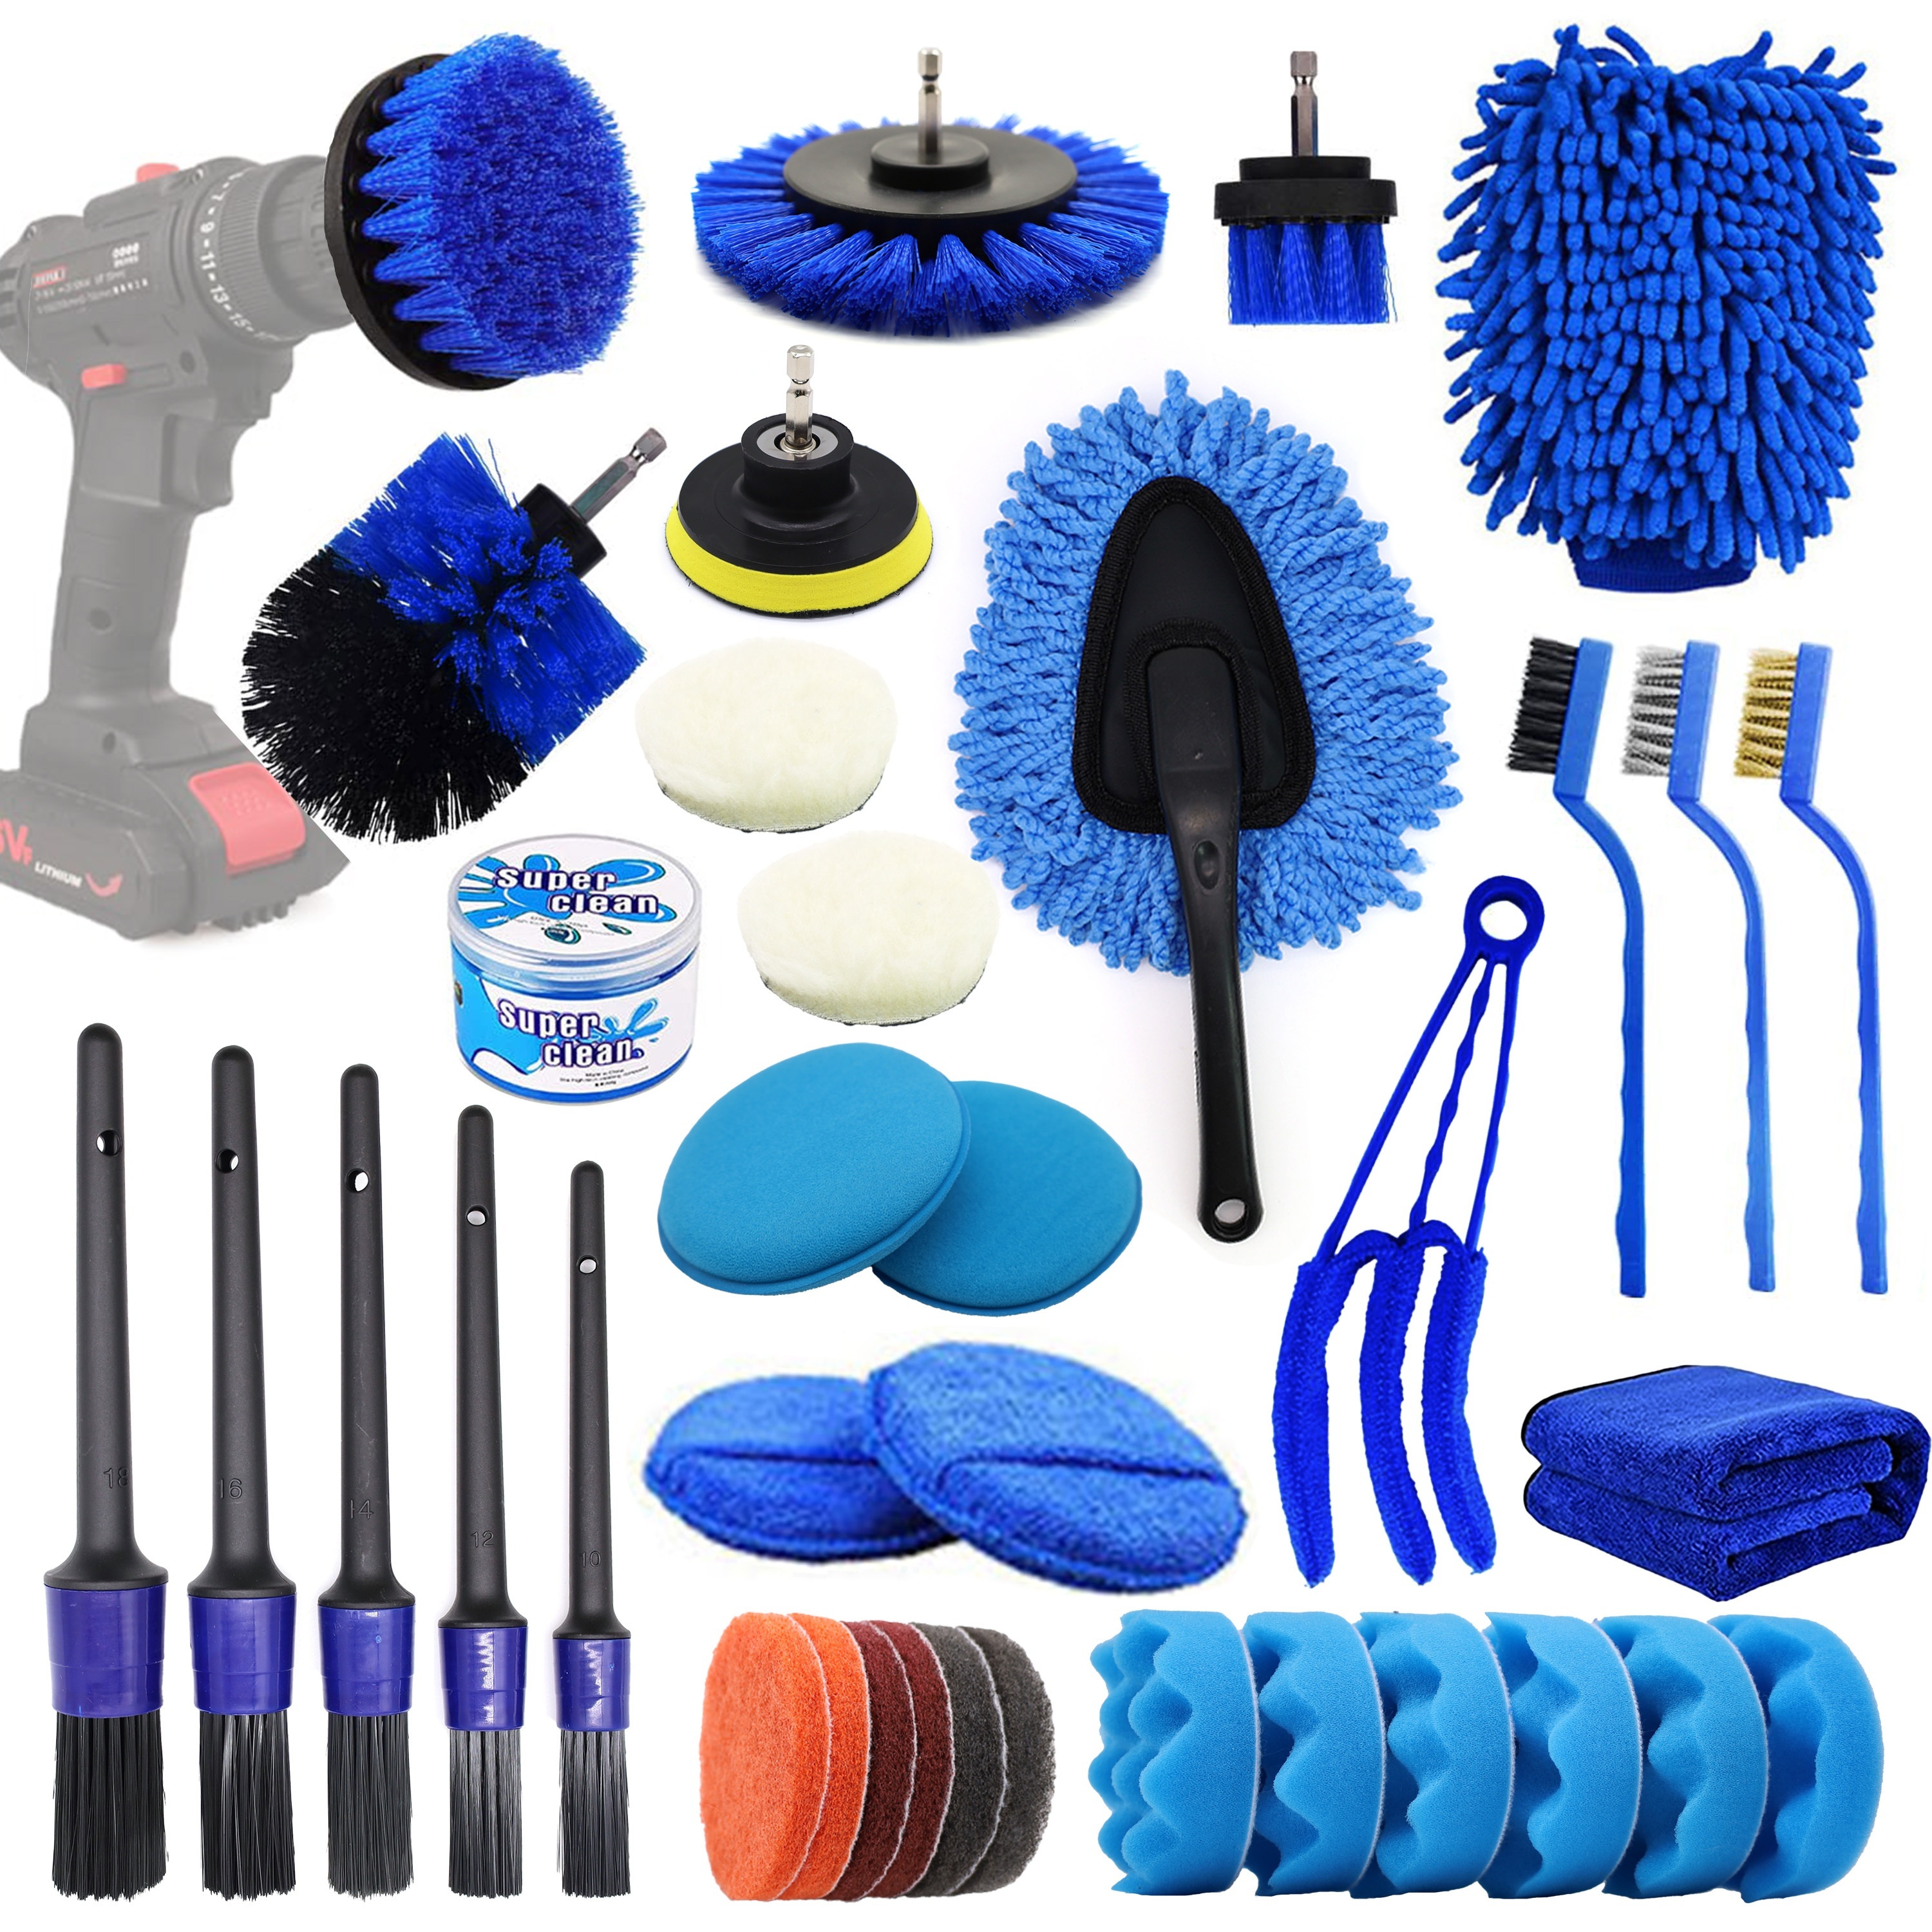 10pcs Auto Car Detailing Brush Set Car Interior Cleaning Kit